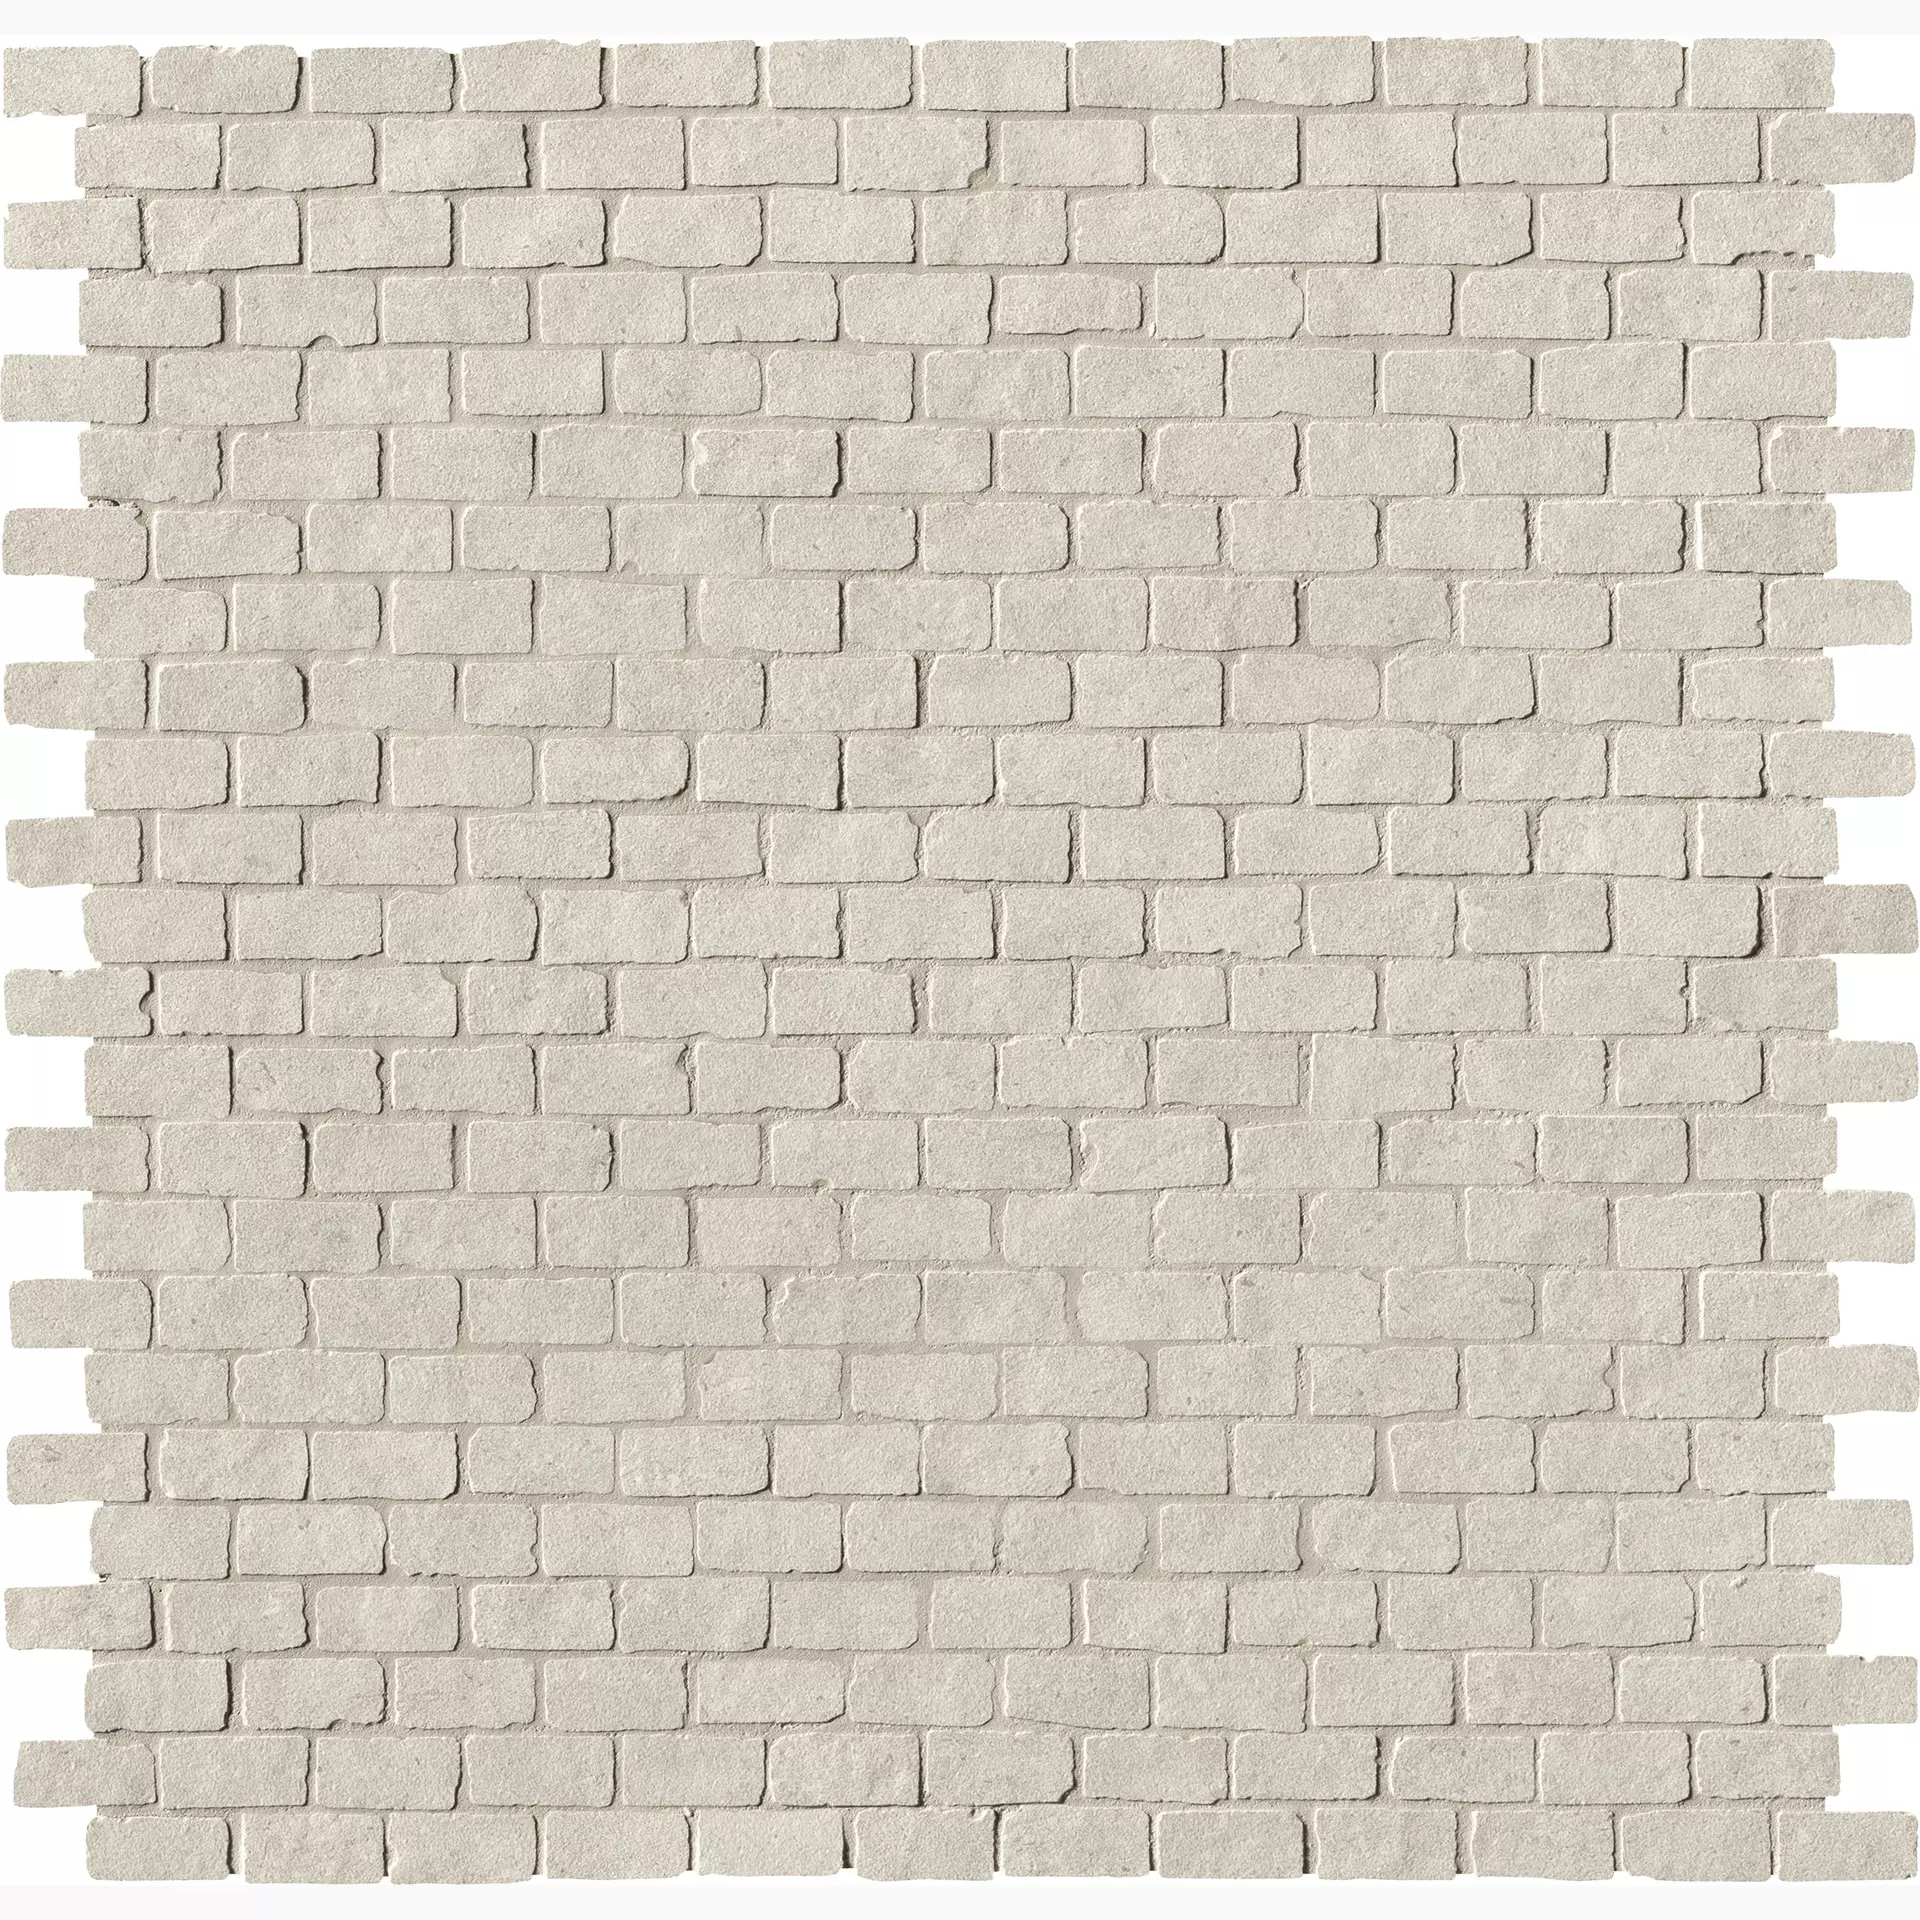 FAP Lumina Stone Grey Anticato Grey fOMN antiquiert 30,5x30,5cm Mosaik Brick